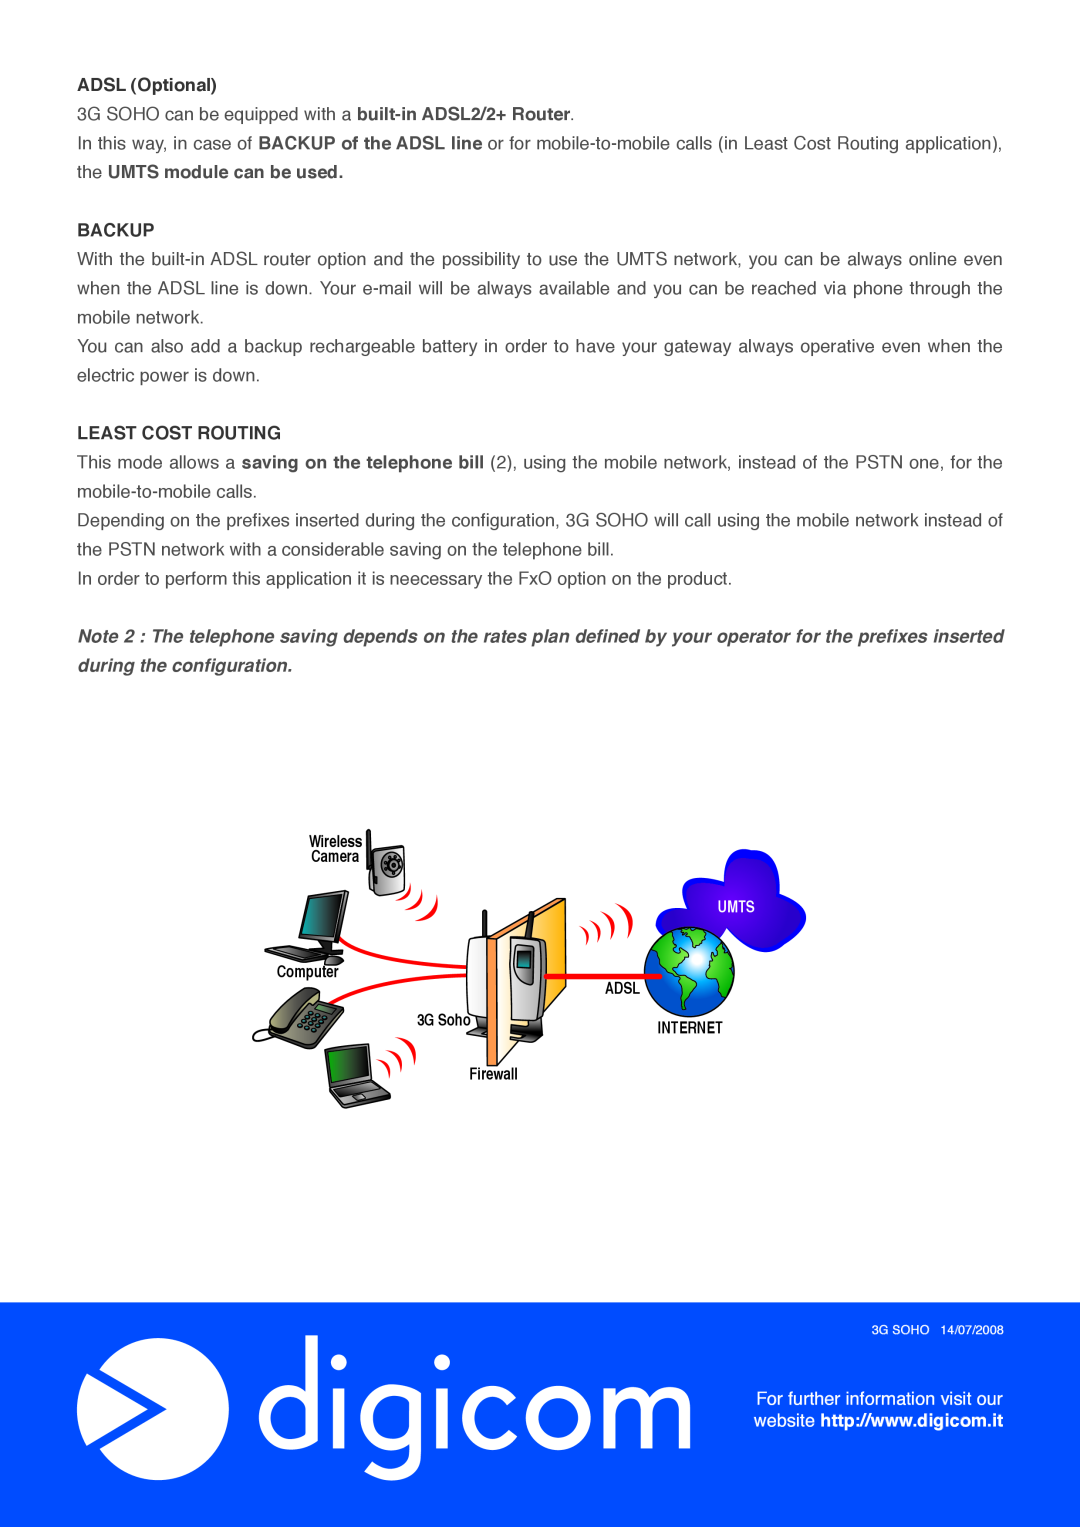 Digicom HSUPA Station manual ADSL Optional, Backup, Least Cost Routing 